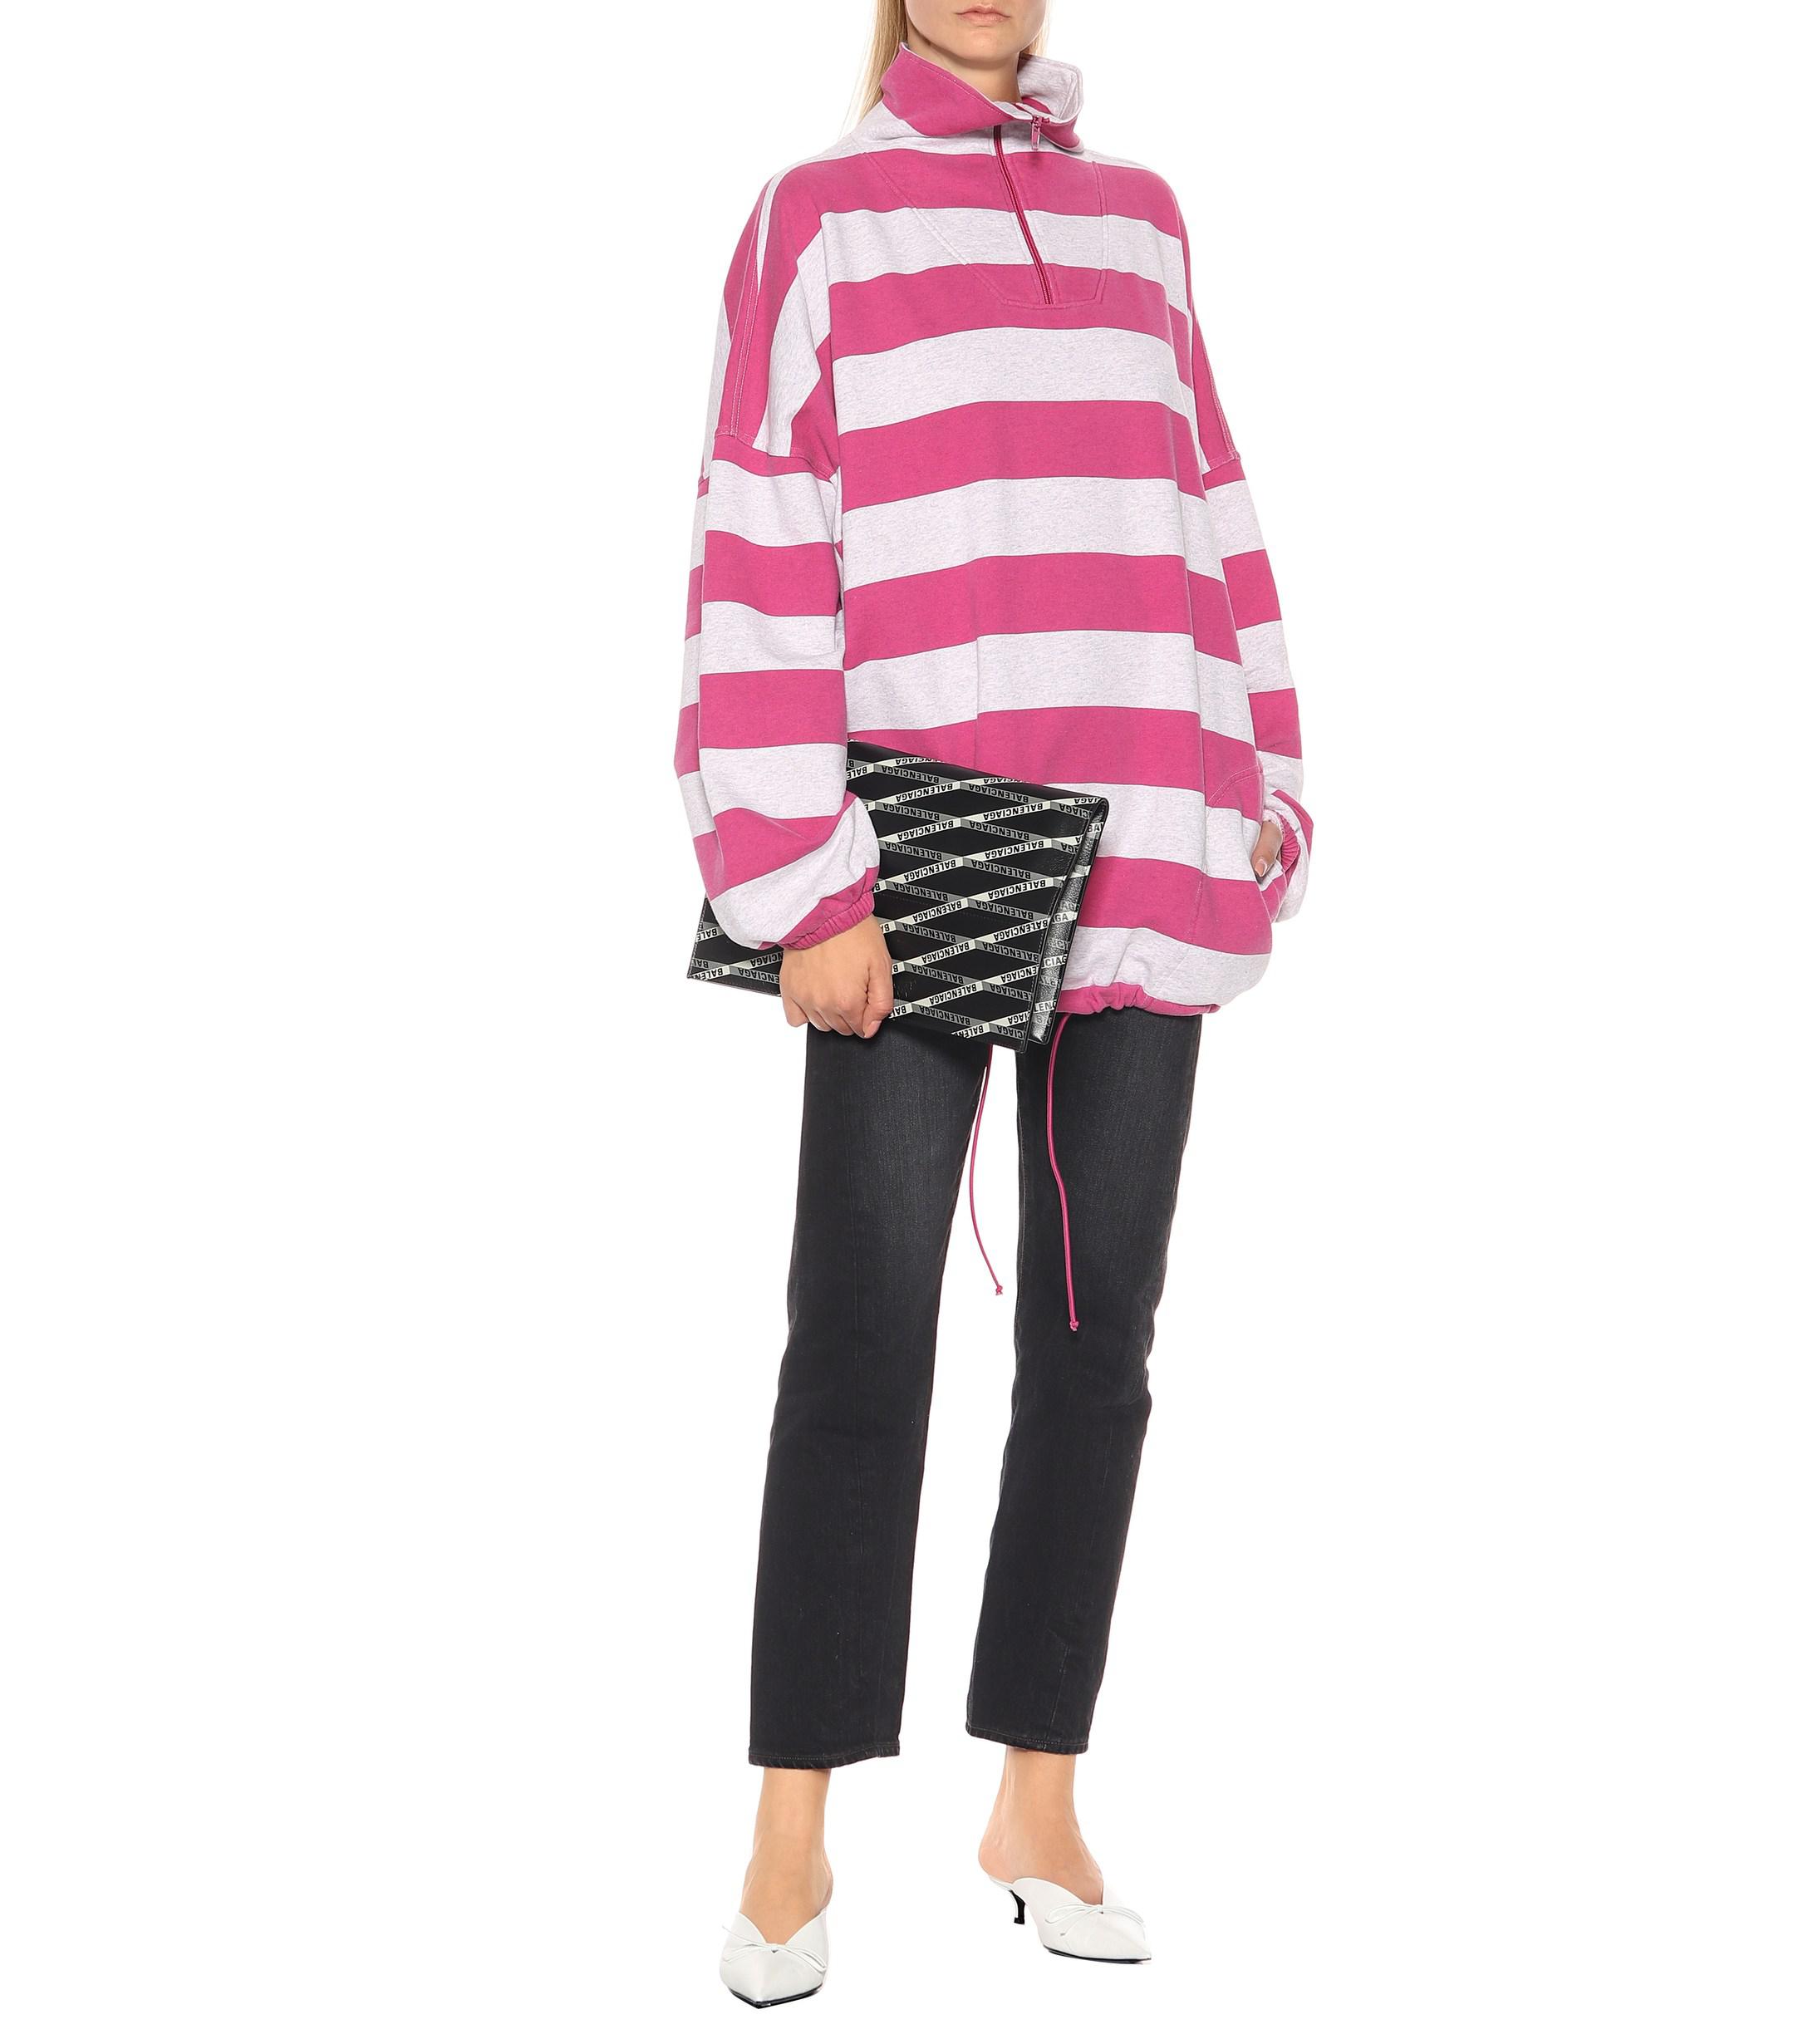 Balenciaga Striped Cotton-blend Sweatshirt in Pink - Lyst